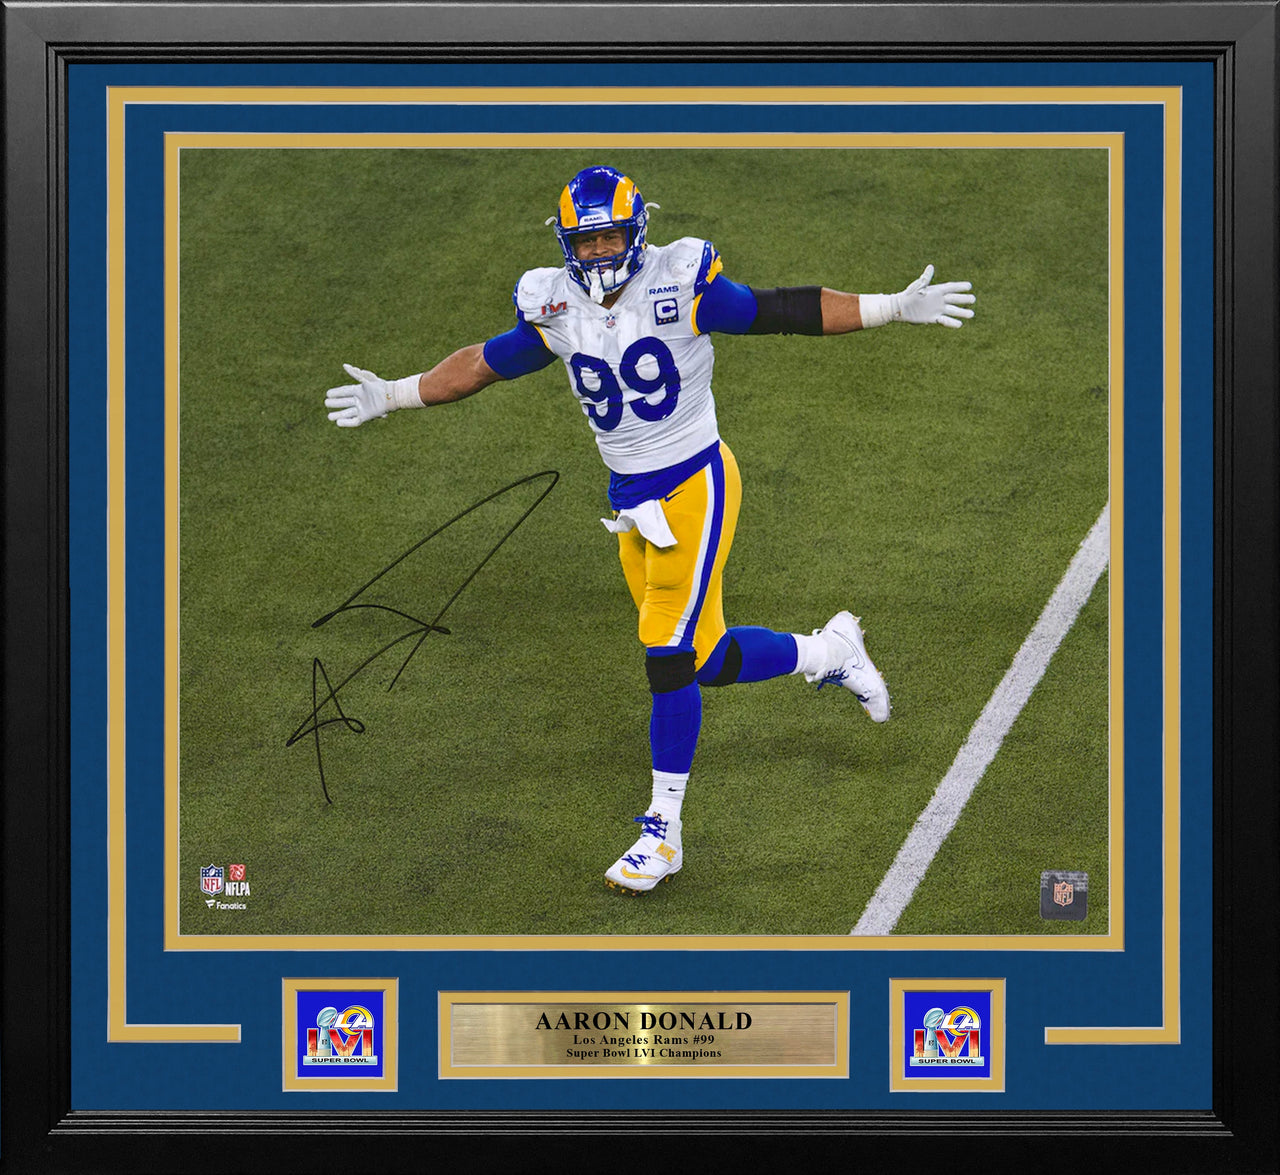 Aaron Donald Super Bowl LVI Celebration Los Angeles Rams Autographed Framed Football Photo - Dynasty Sports & Framing 